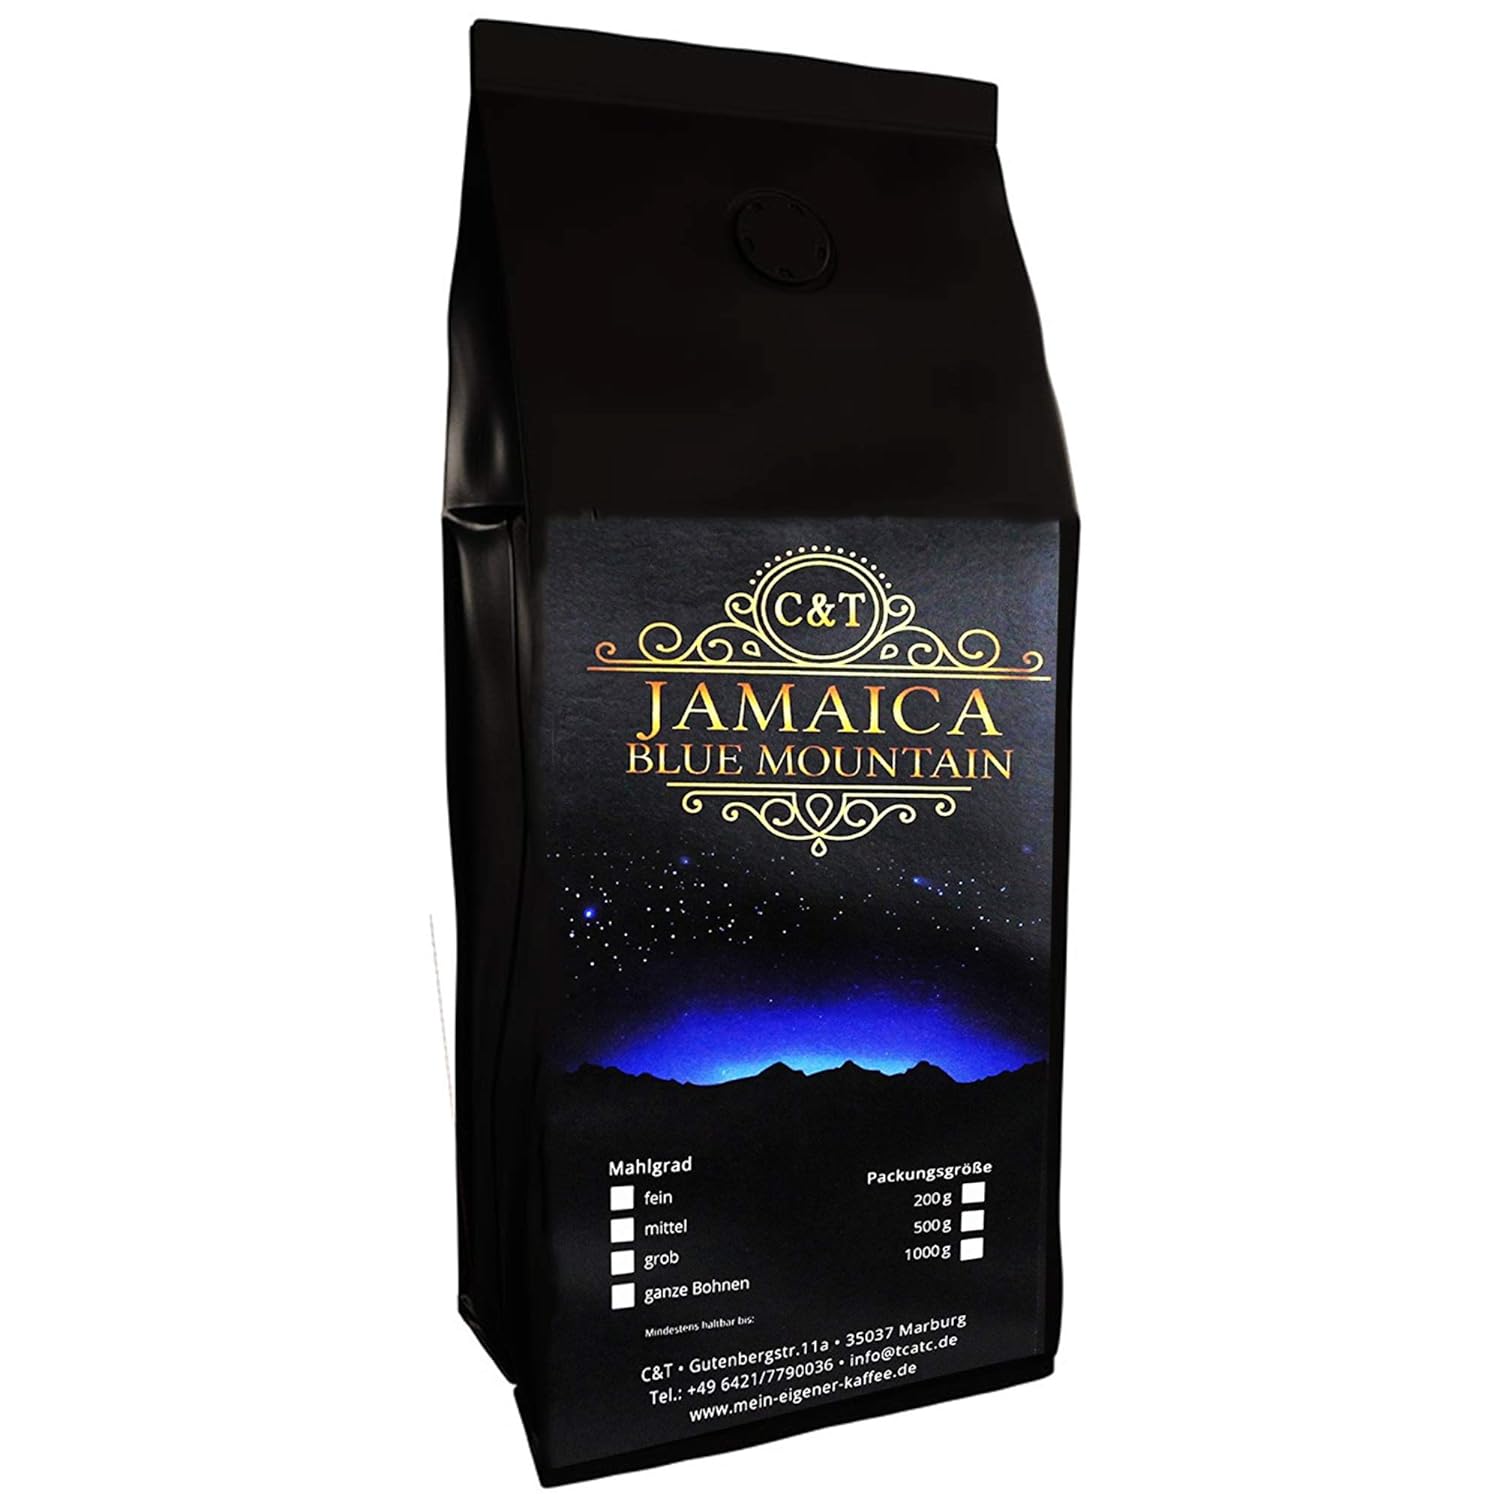 C&T 100% Jamaica Blue Mountain Aa Wallenford Estate 100 g whole beans Sortininrein Singe Origin Rarity from Jamaica